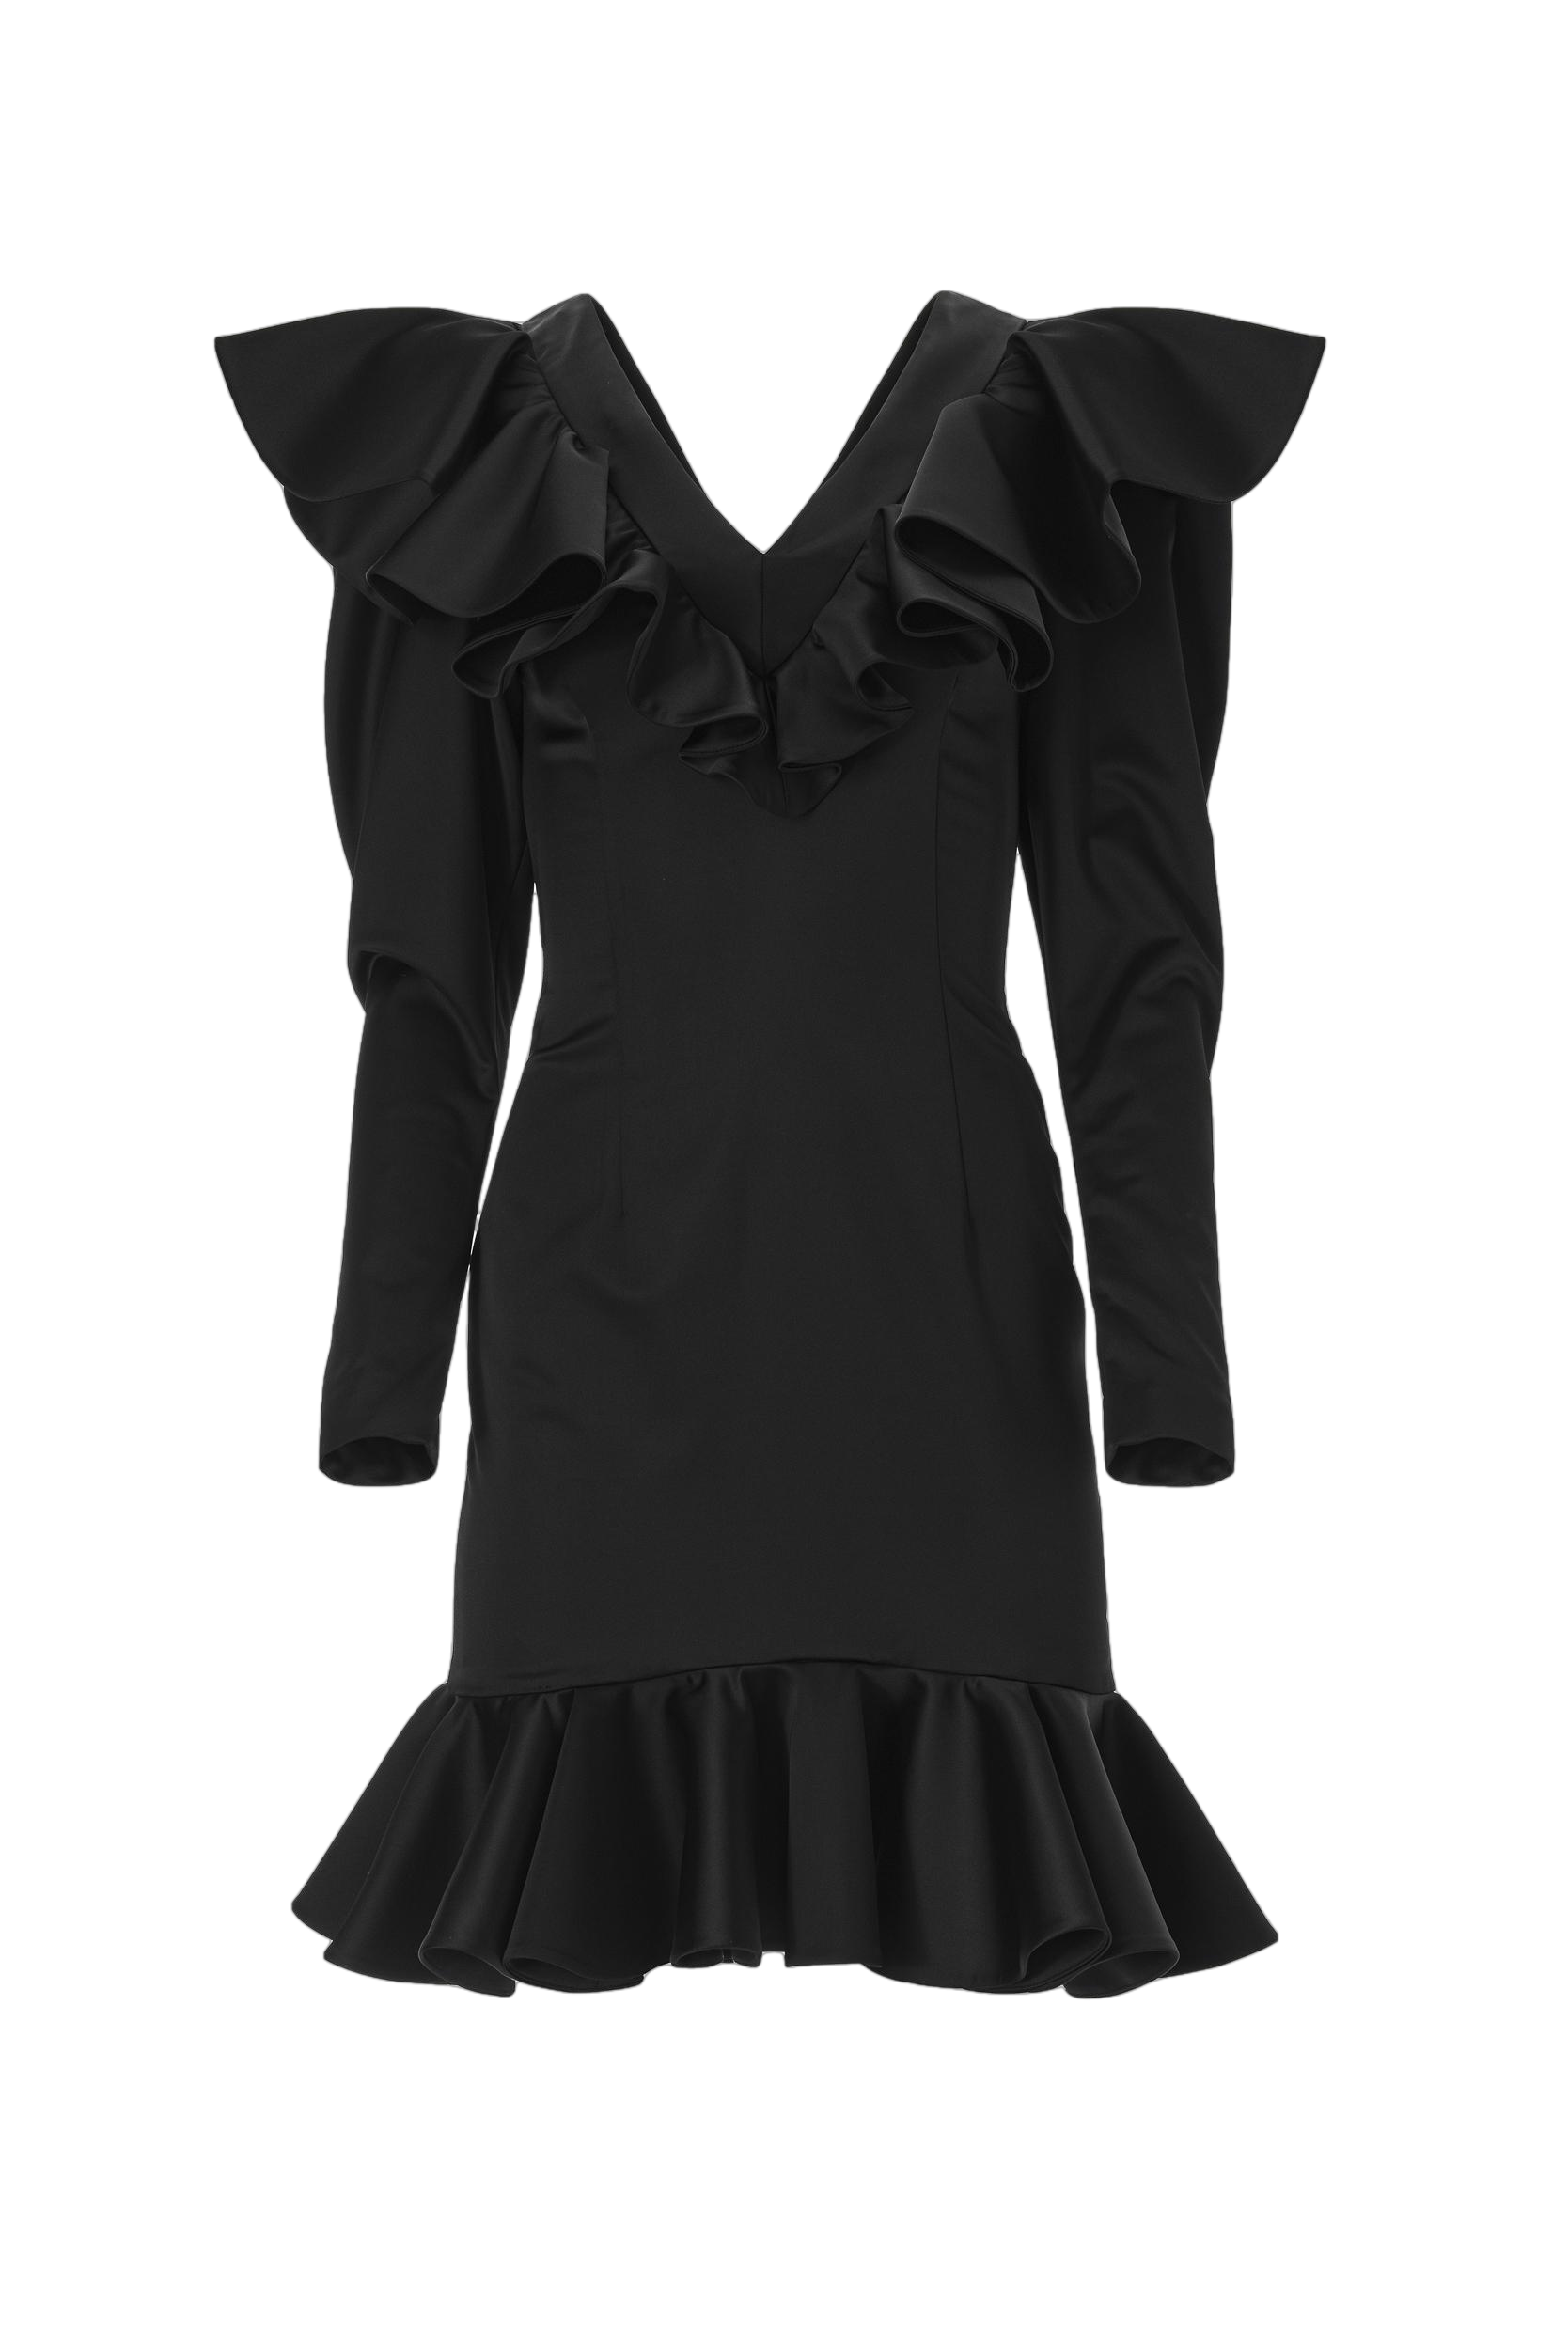 Shop Lita Couture Signature Black Dress